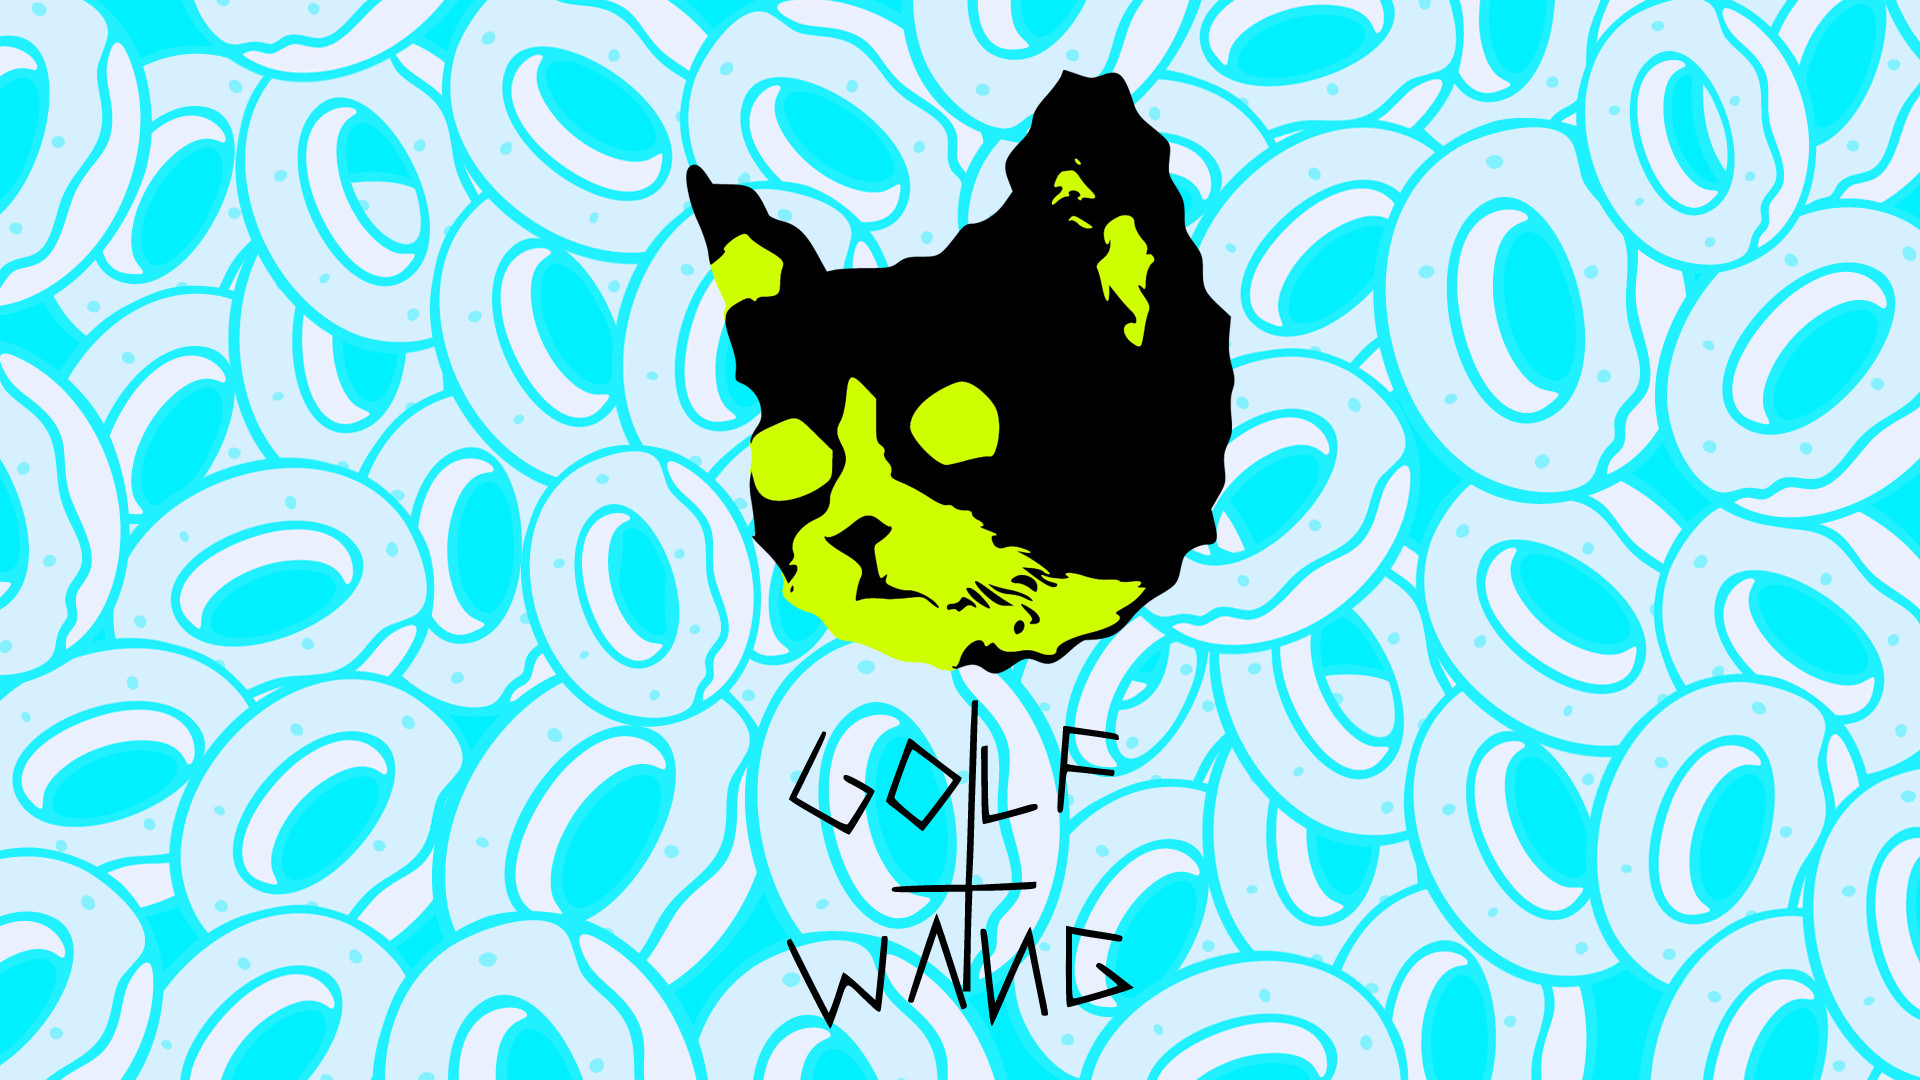 Odd Future Iphone Wallpaper Tumblr Ofwgkta Wallpaper - Golf Wang Wallpaper Hd , HD Wallpaper & Backgrounds